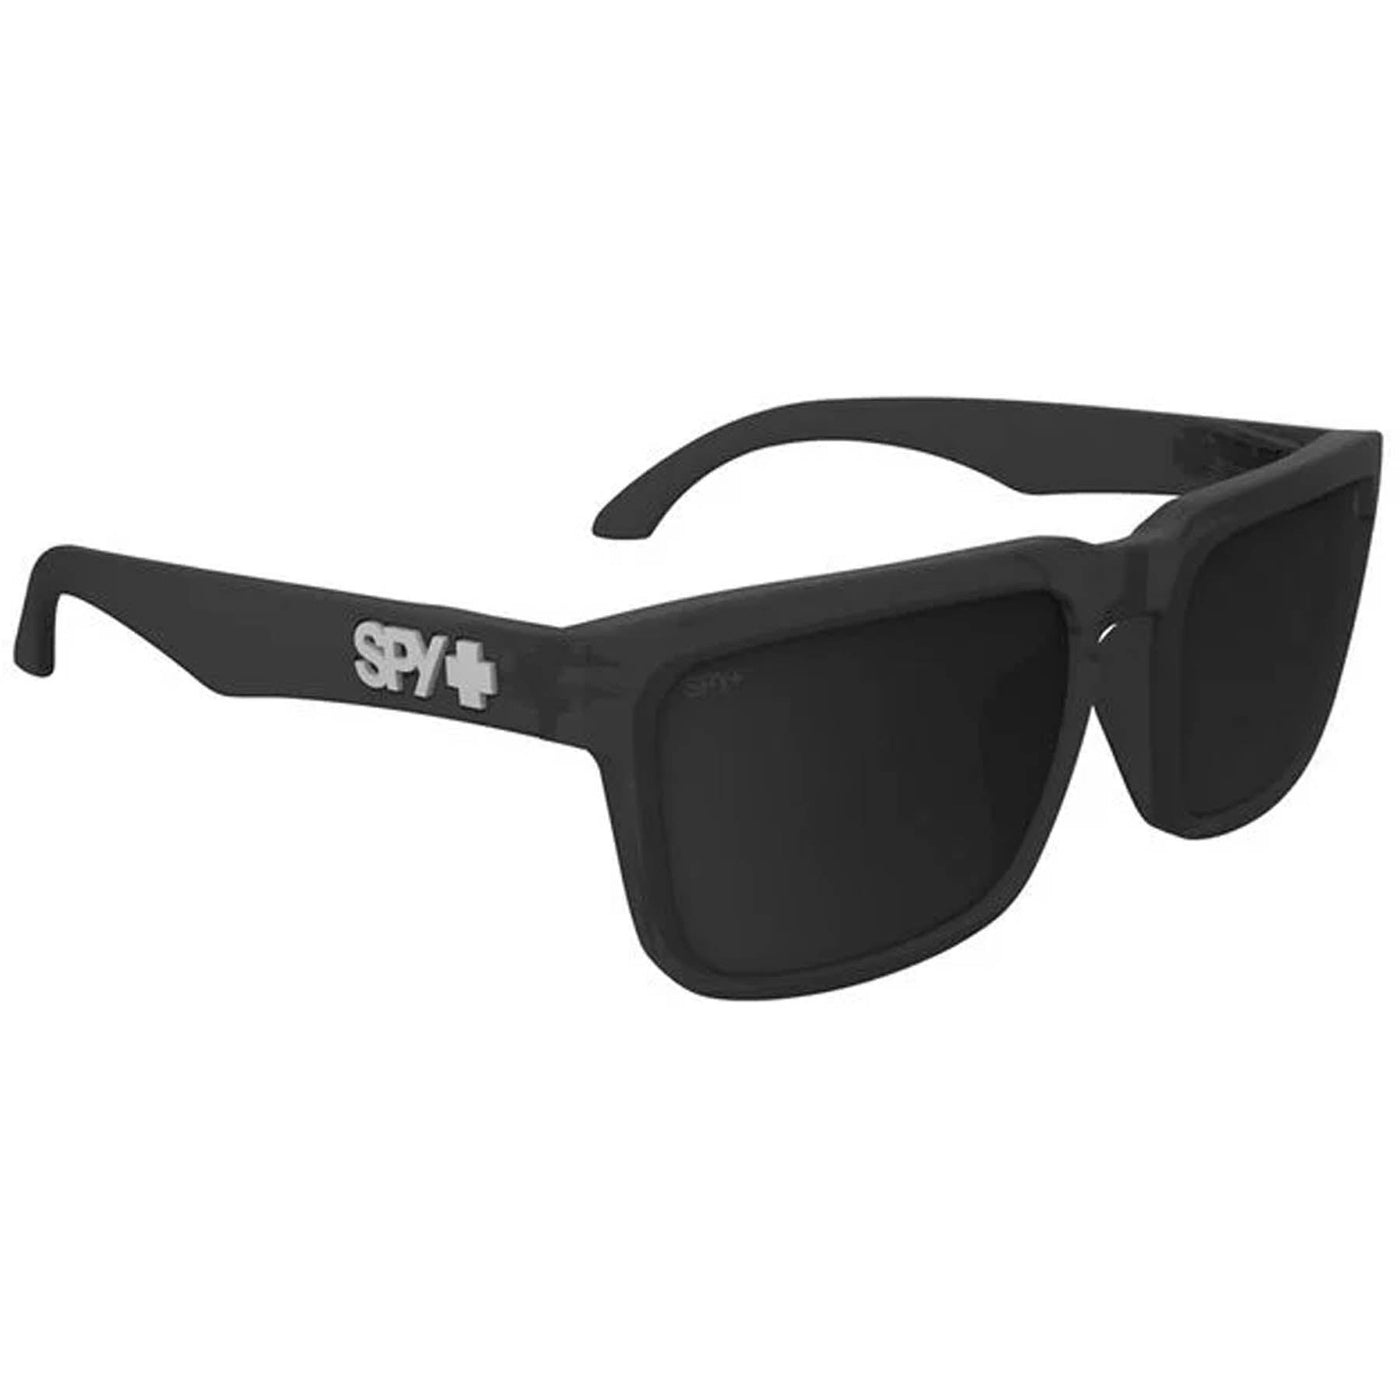 SPY HELM Sunglasses, Happy Lens - Translucent Black 8Lines Shop - Fast Shipping